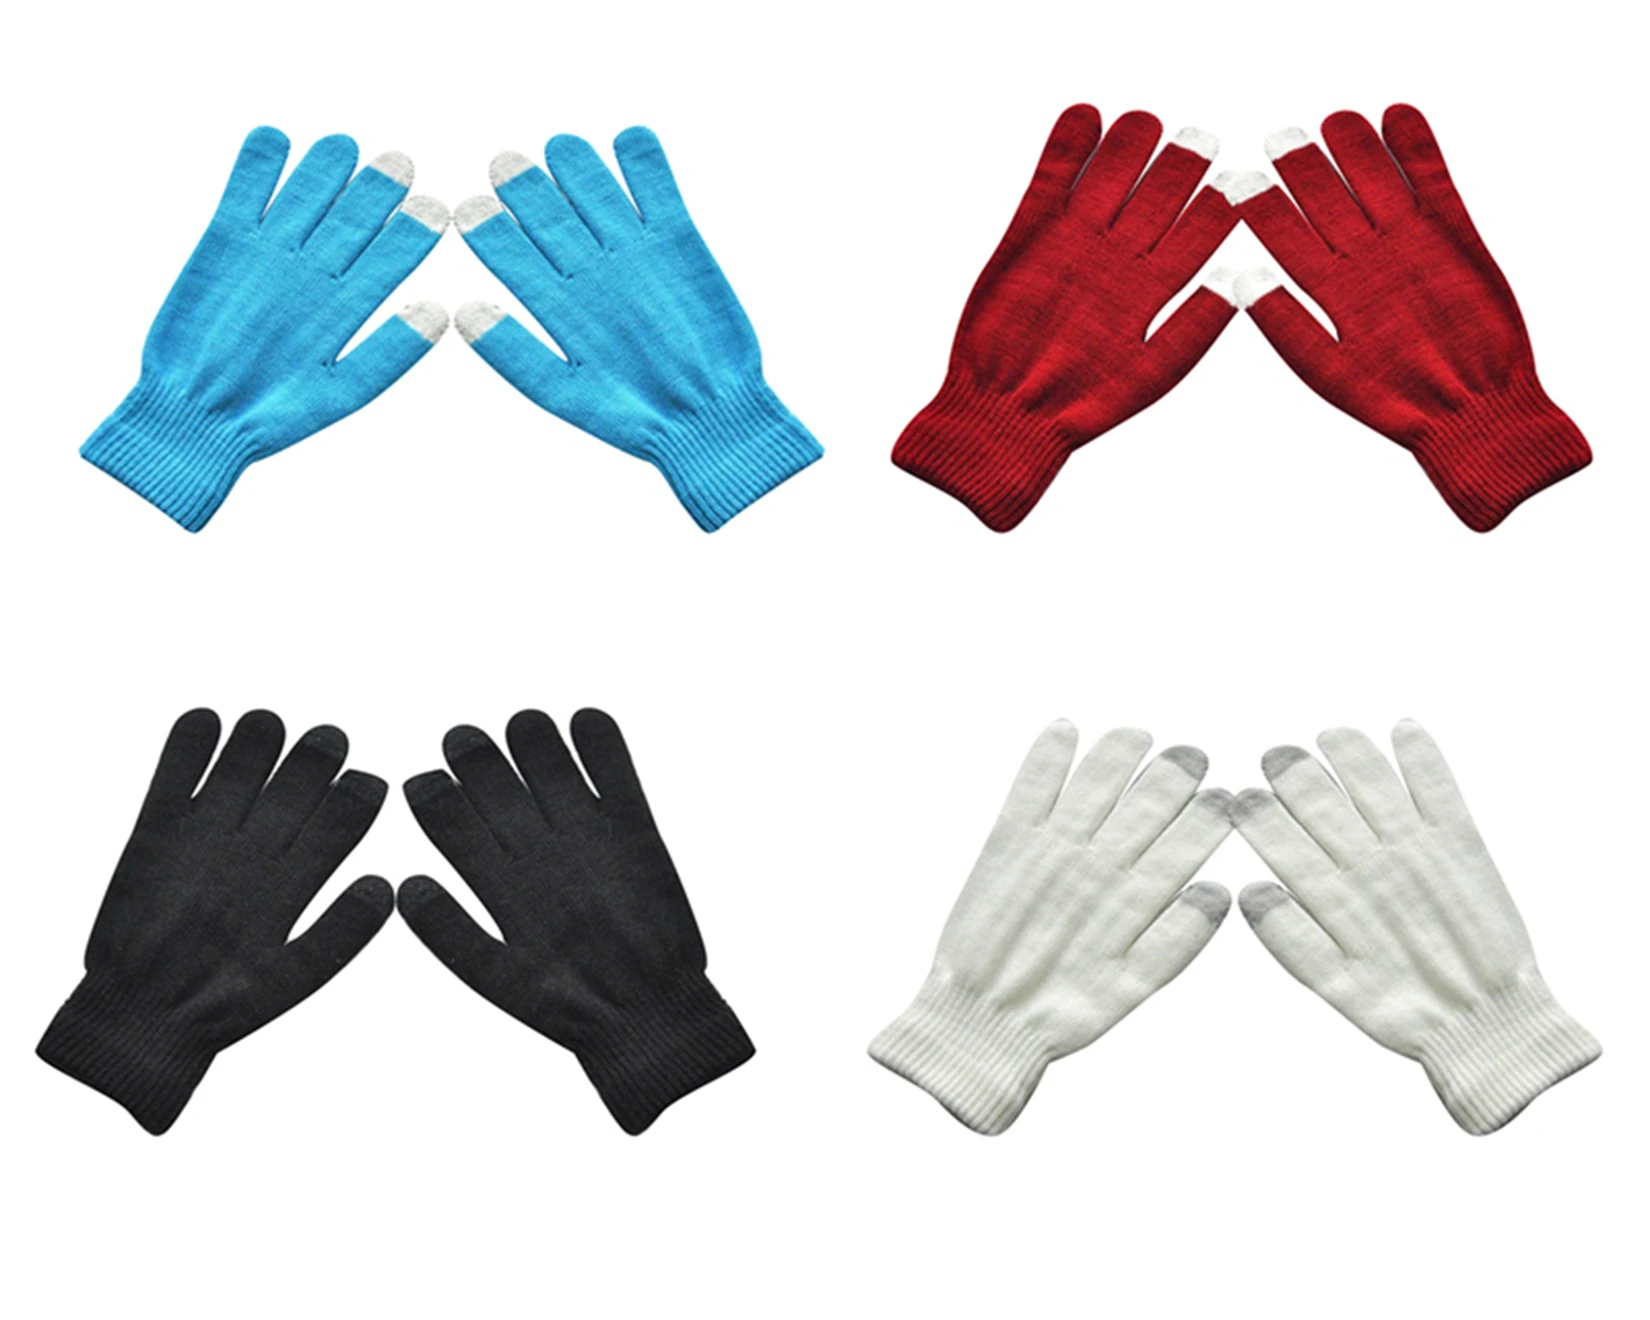 

4 Pairs Women's Cold Weather Touch Screen Gloves, Unisex Warm Fleece Knit Outdoor Sport Mittens winter work gloves women